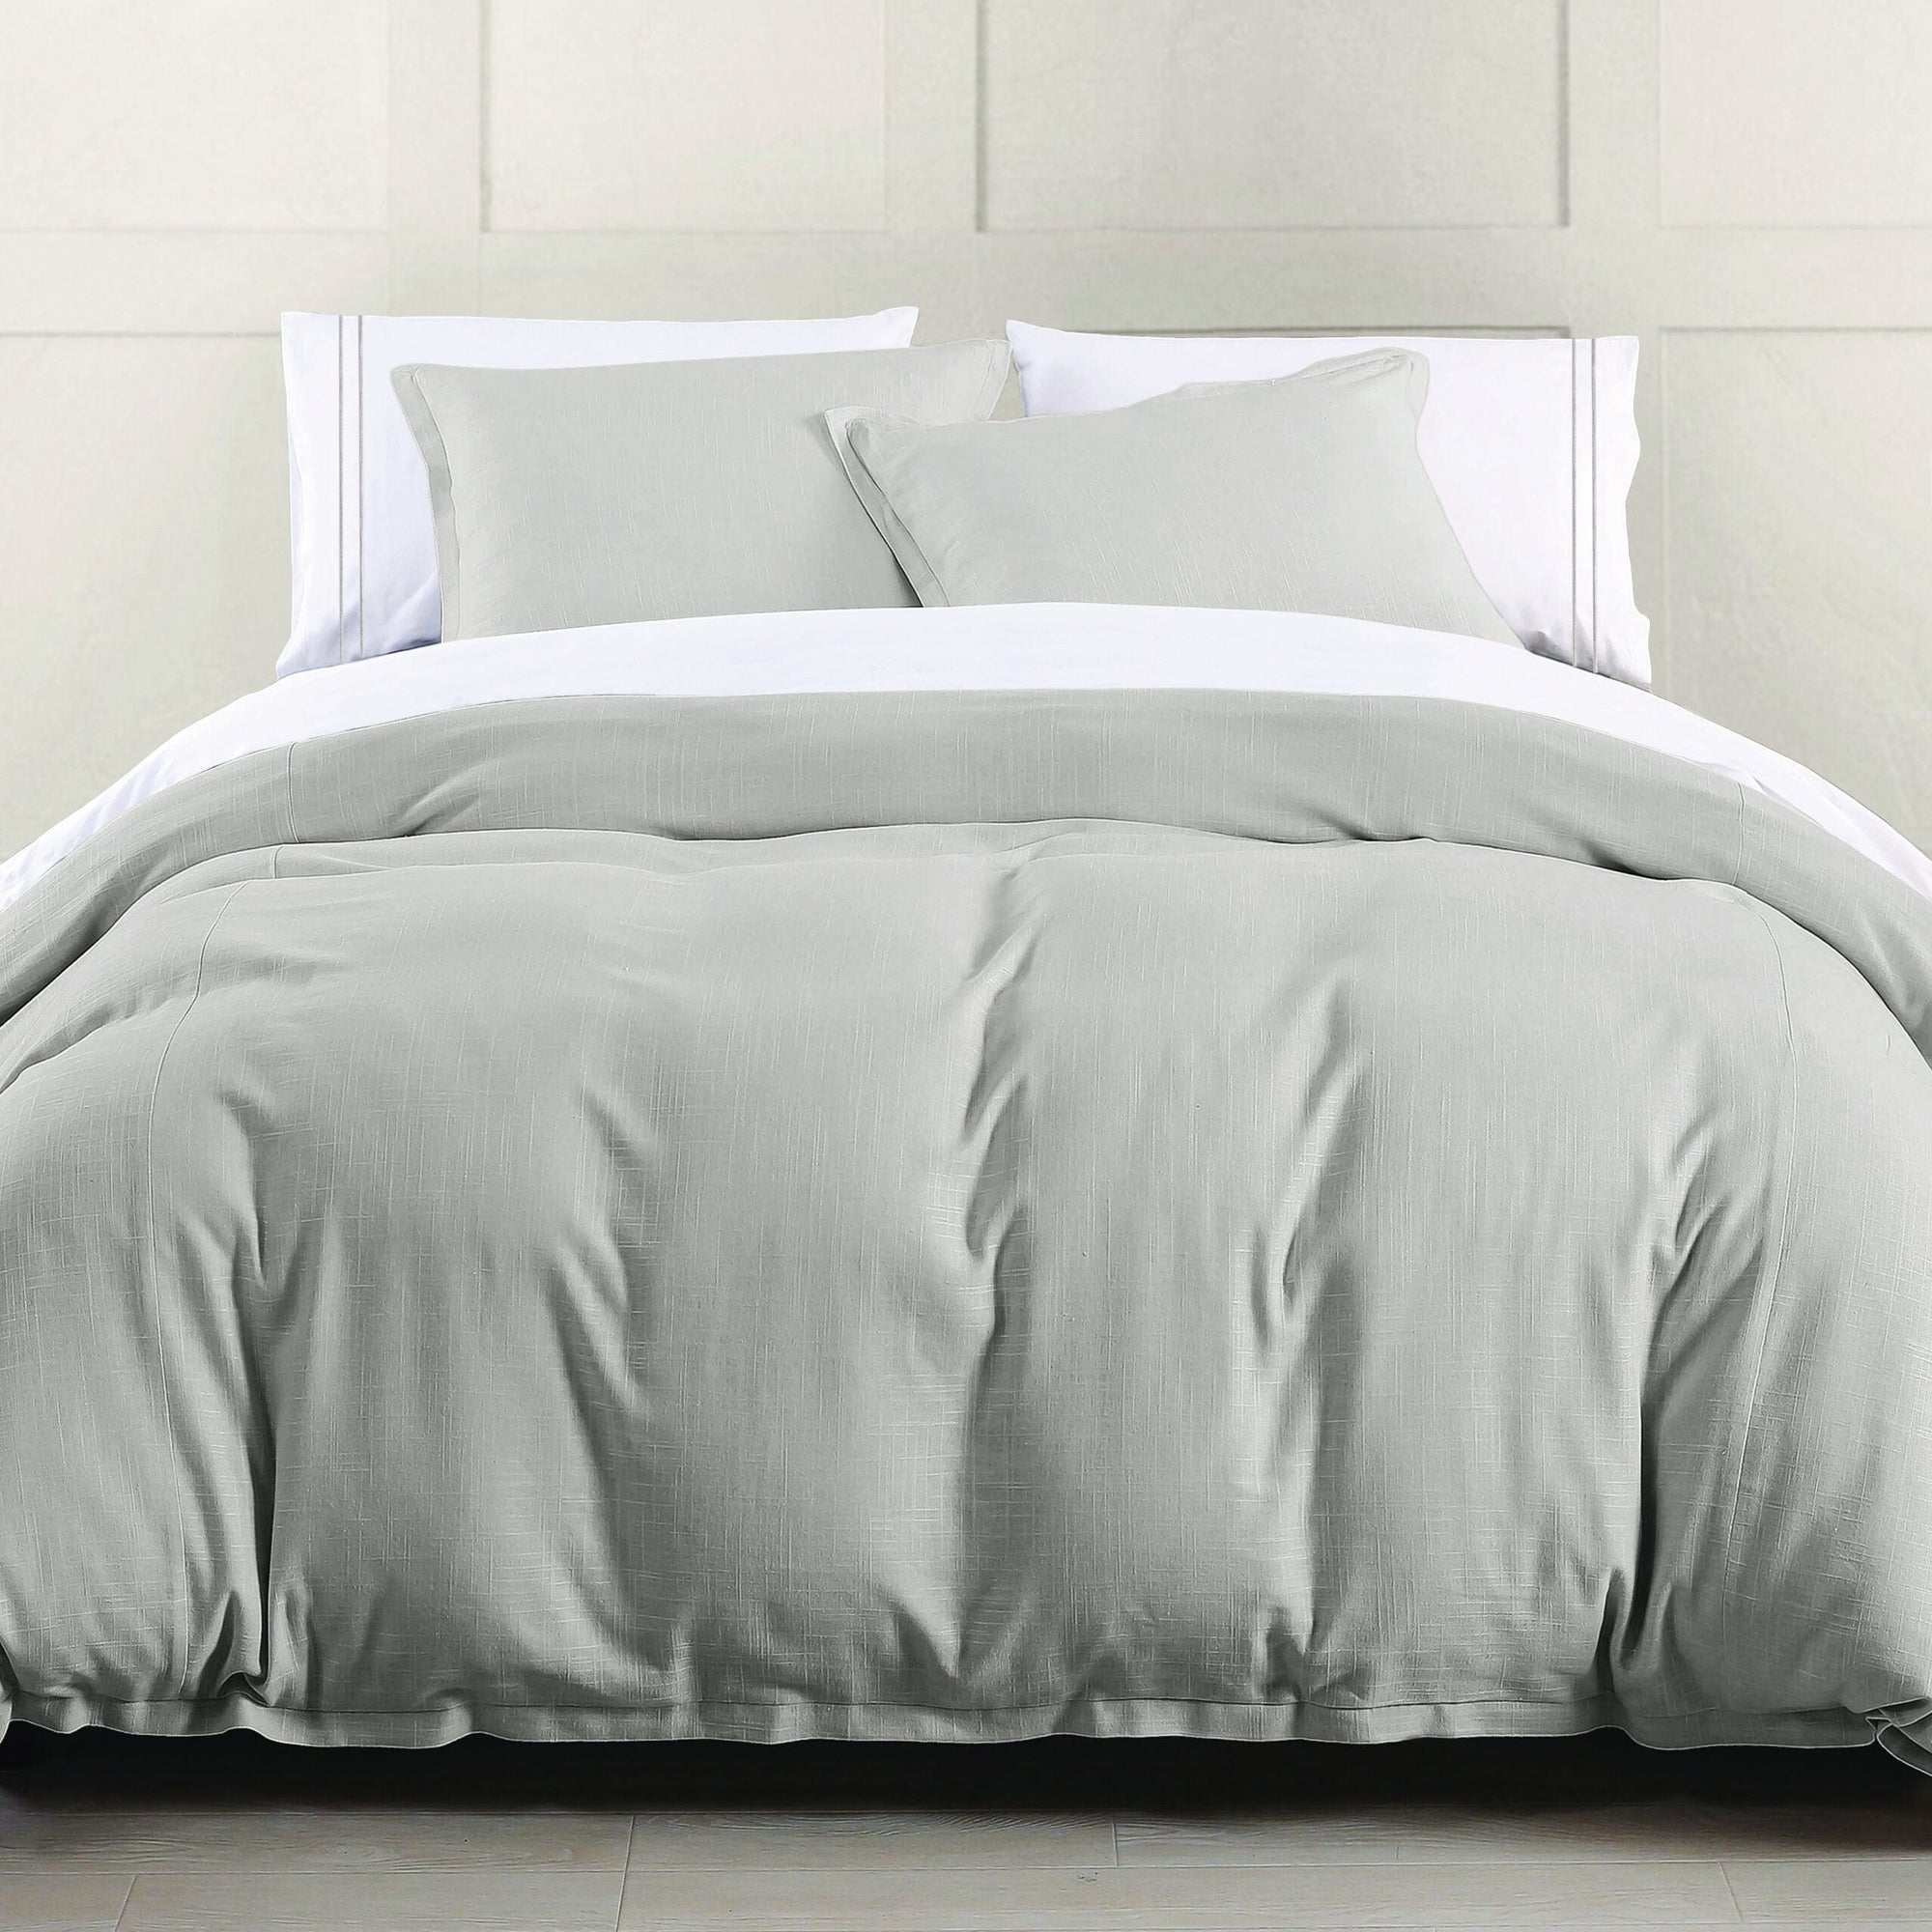 Hera Washed Linen Flange Bedding Set Comforter Set / Super Queen / Light Gray Comforter / Duvet Cover